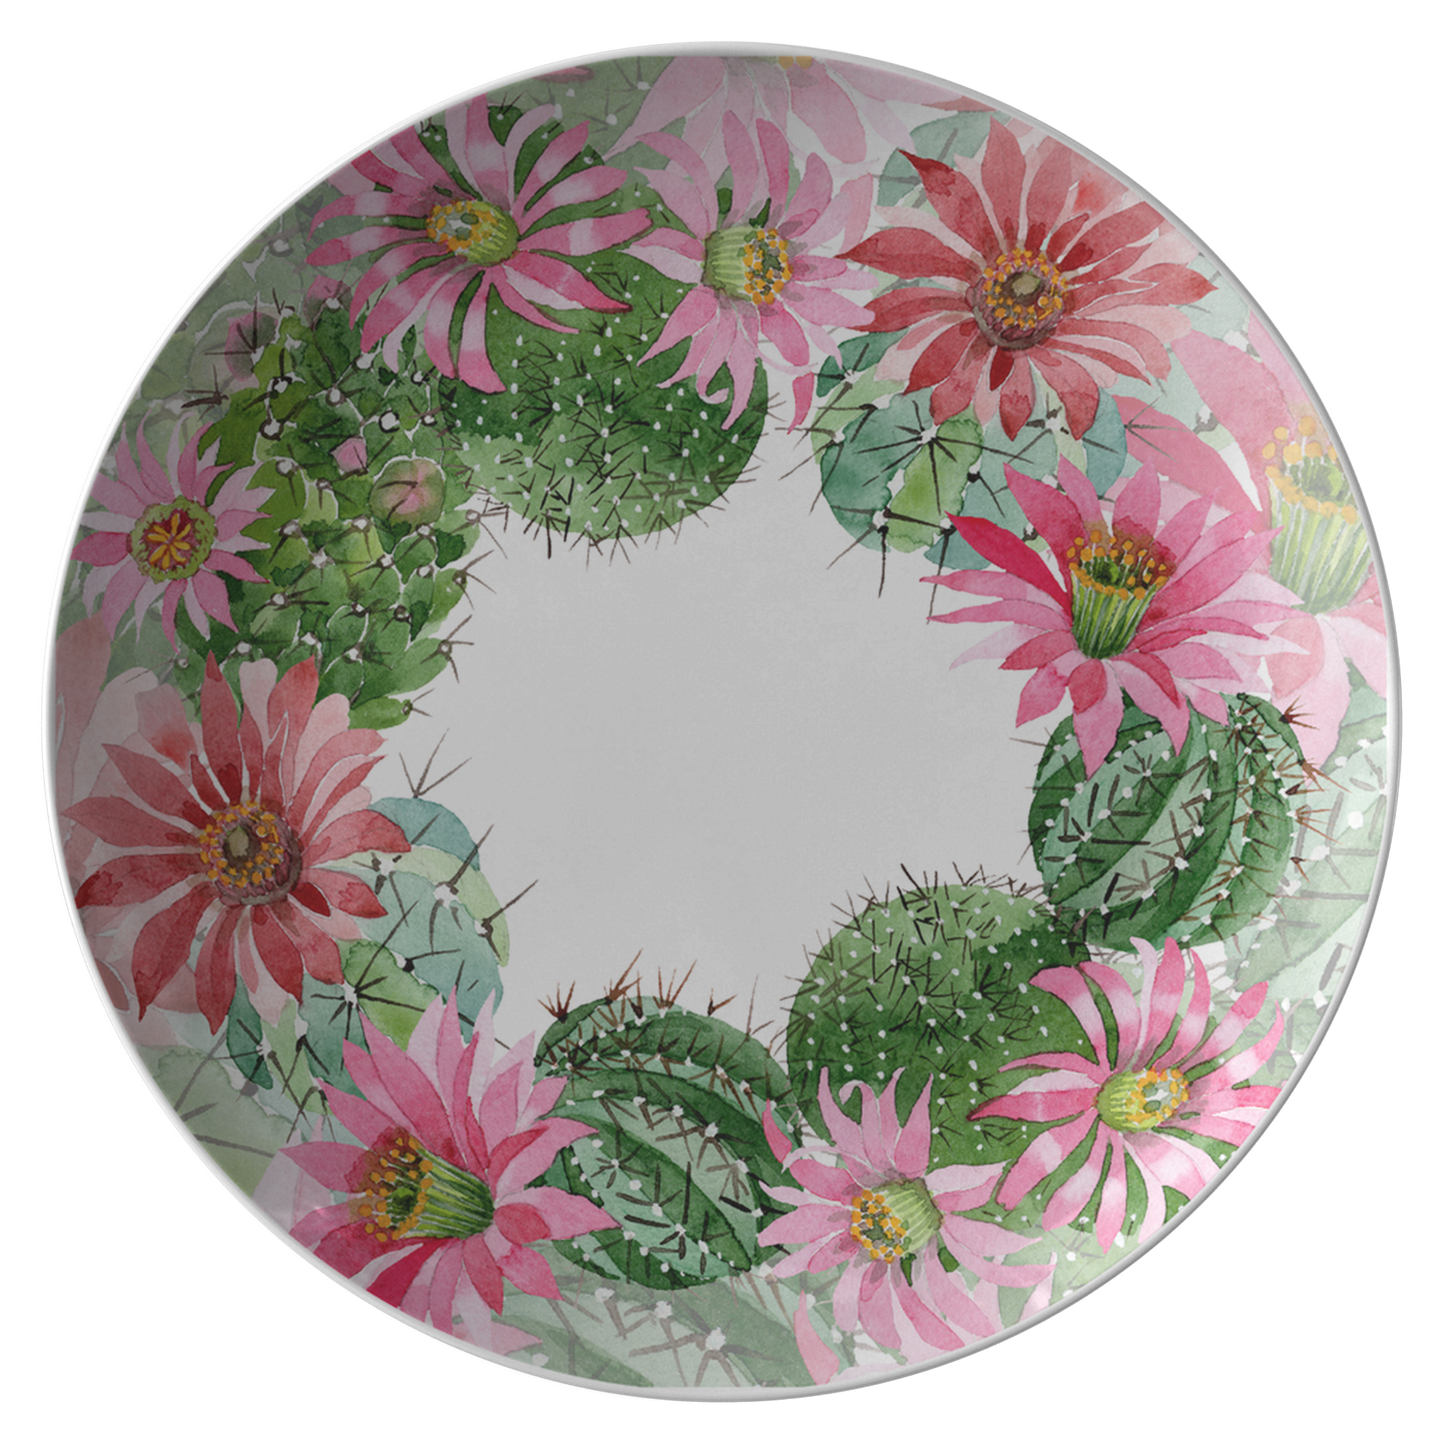 Beautiful Succulent and Desert Flowers Decorative Plate